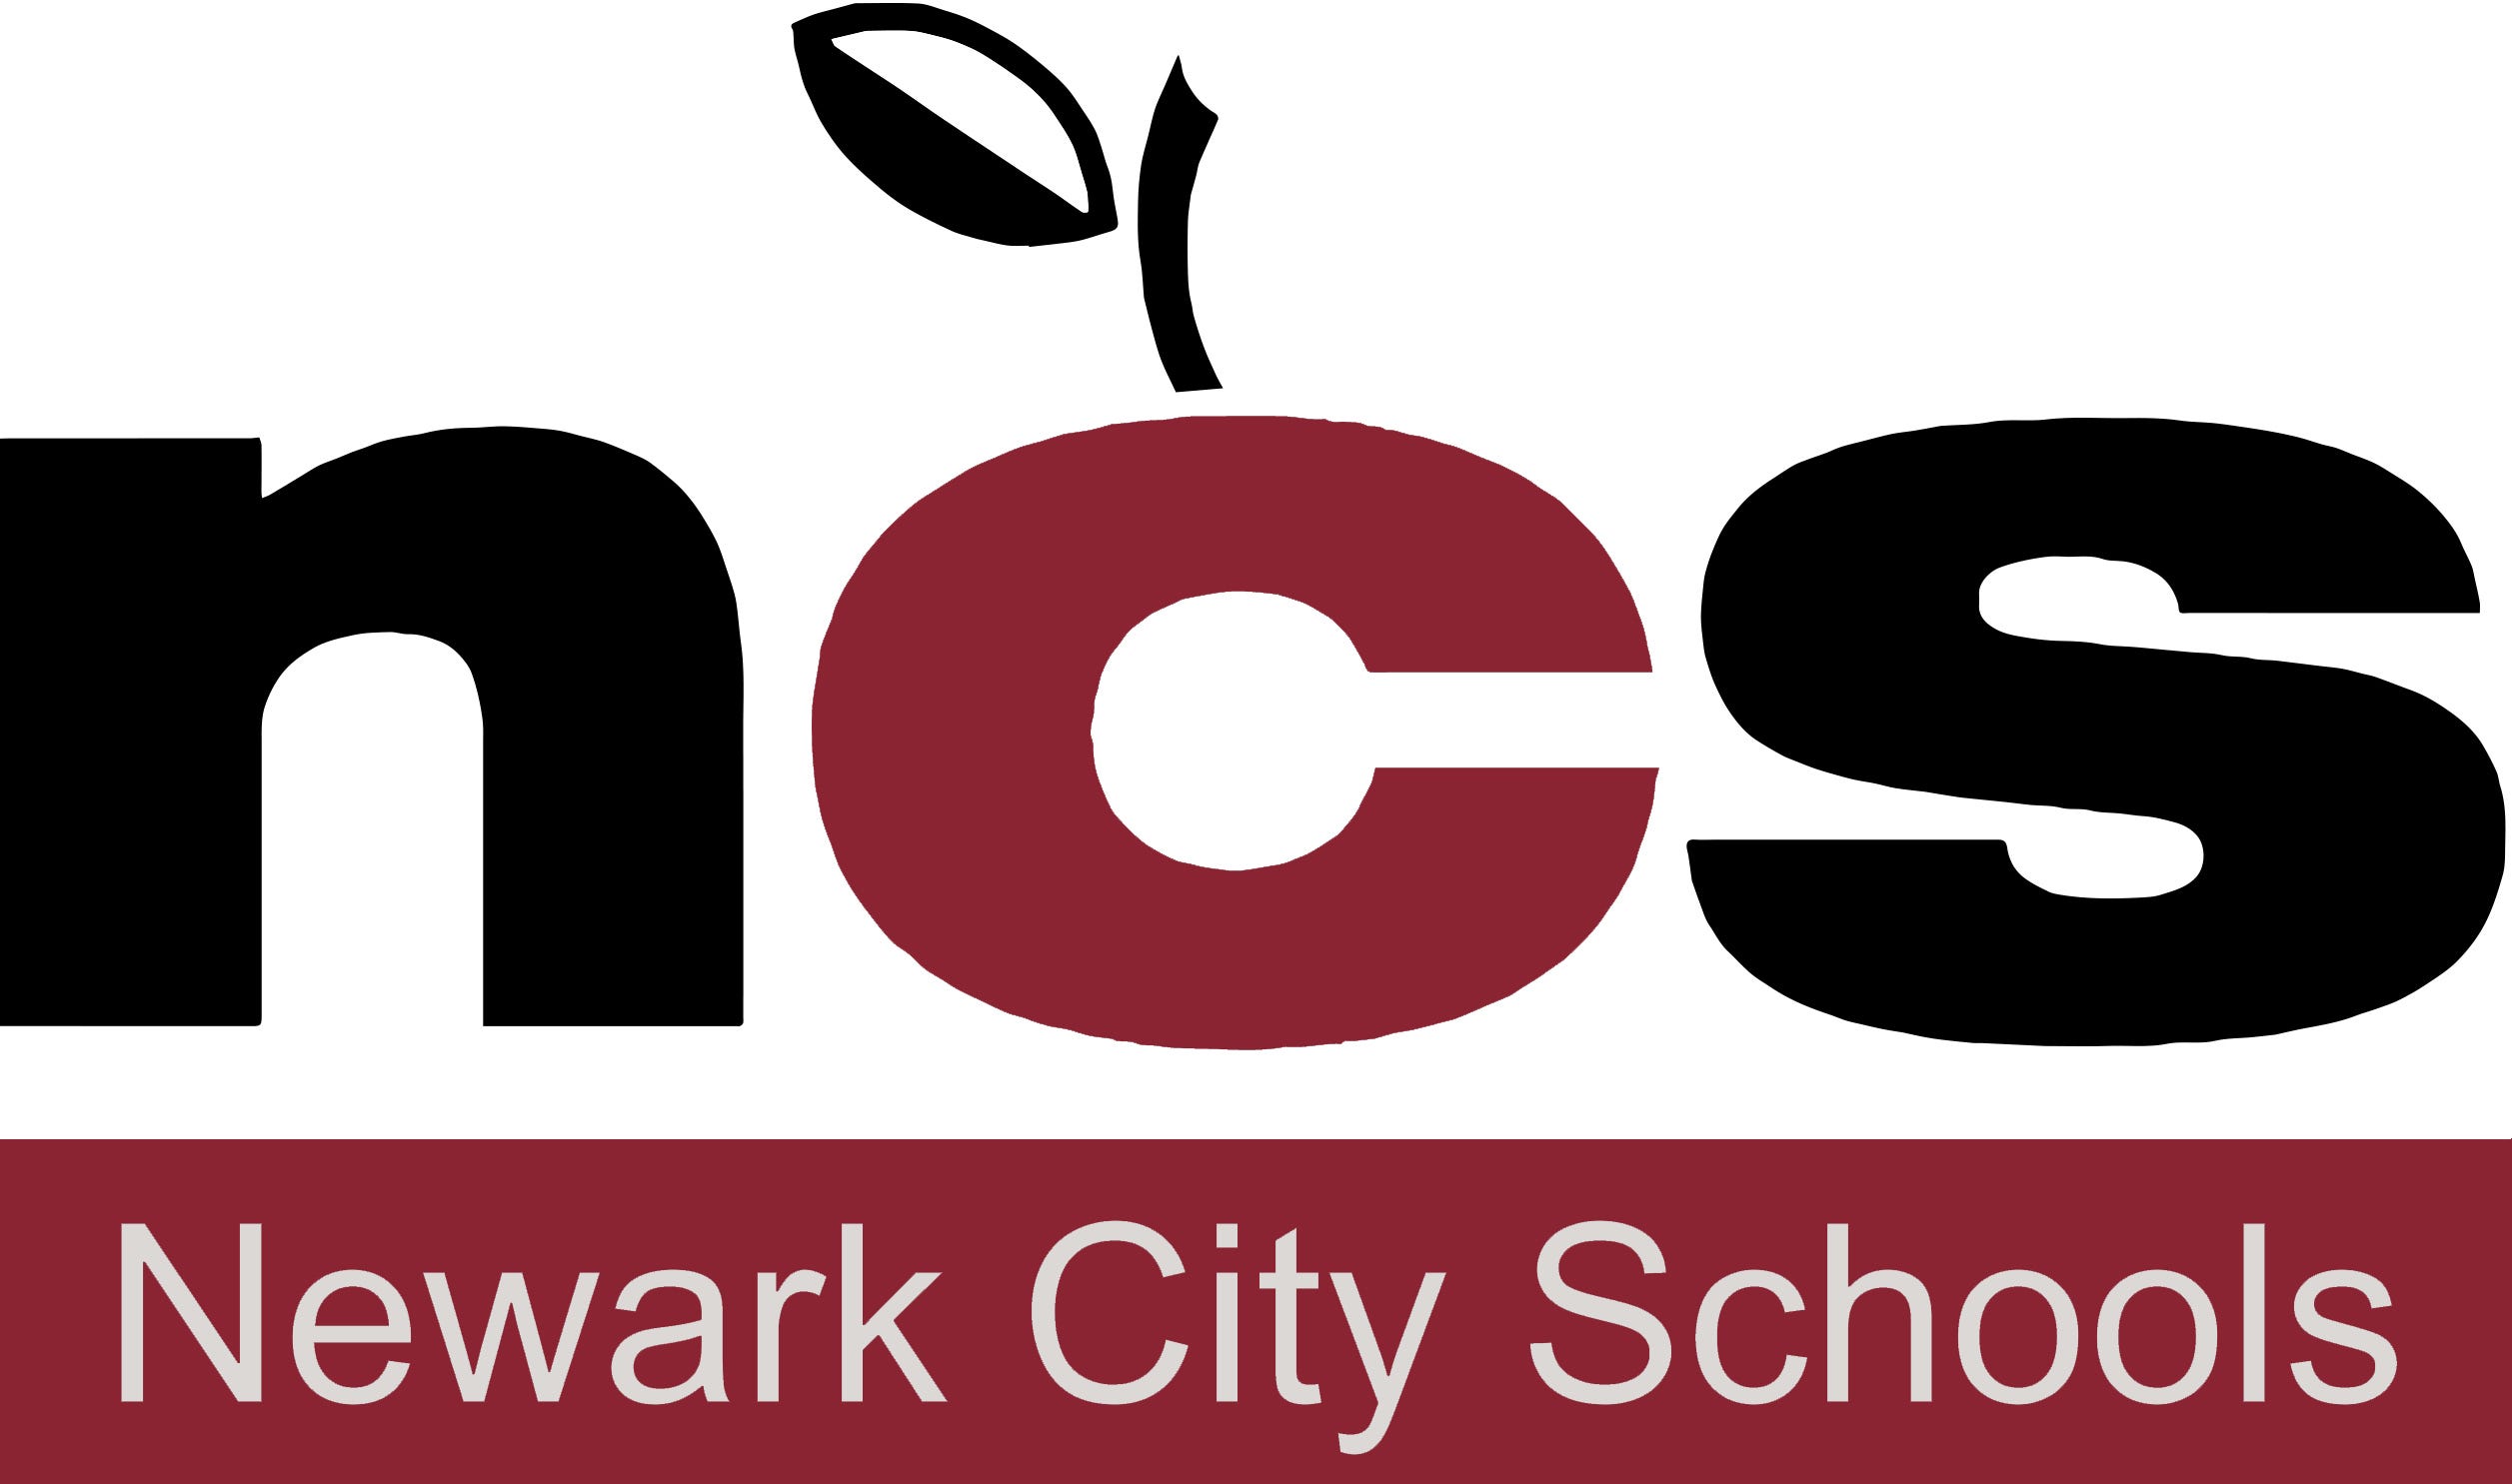 Newark City Schools logo